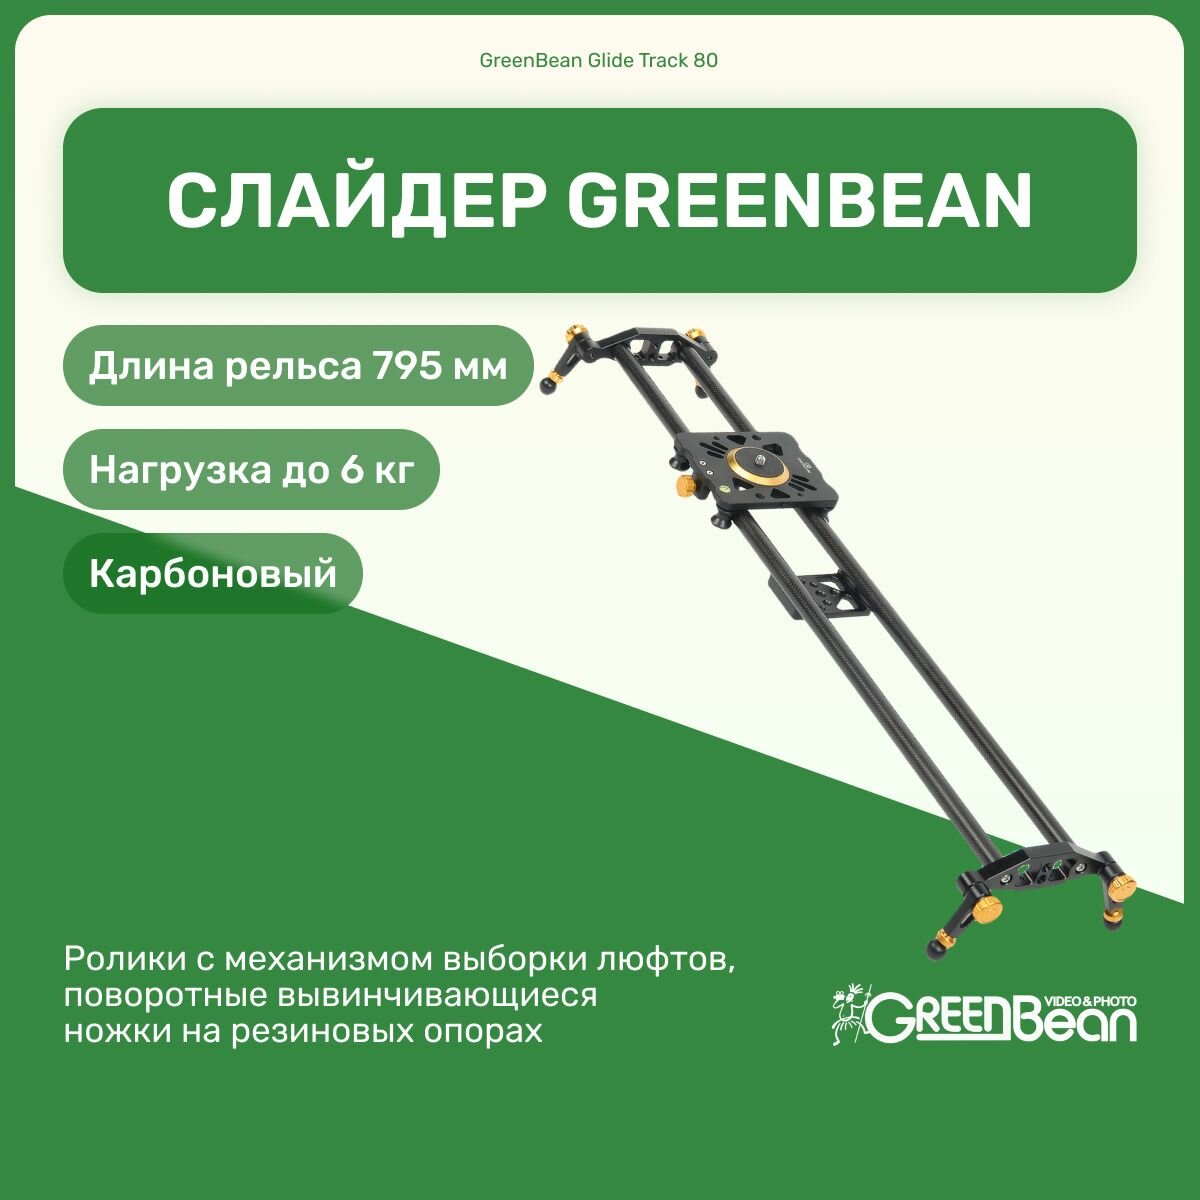 Слайдер GreenBean Glide Track 80 см для камеры, оборудование для фото и видео съемок